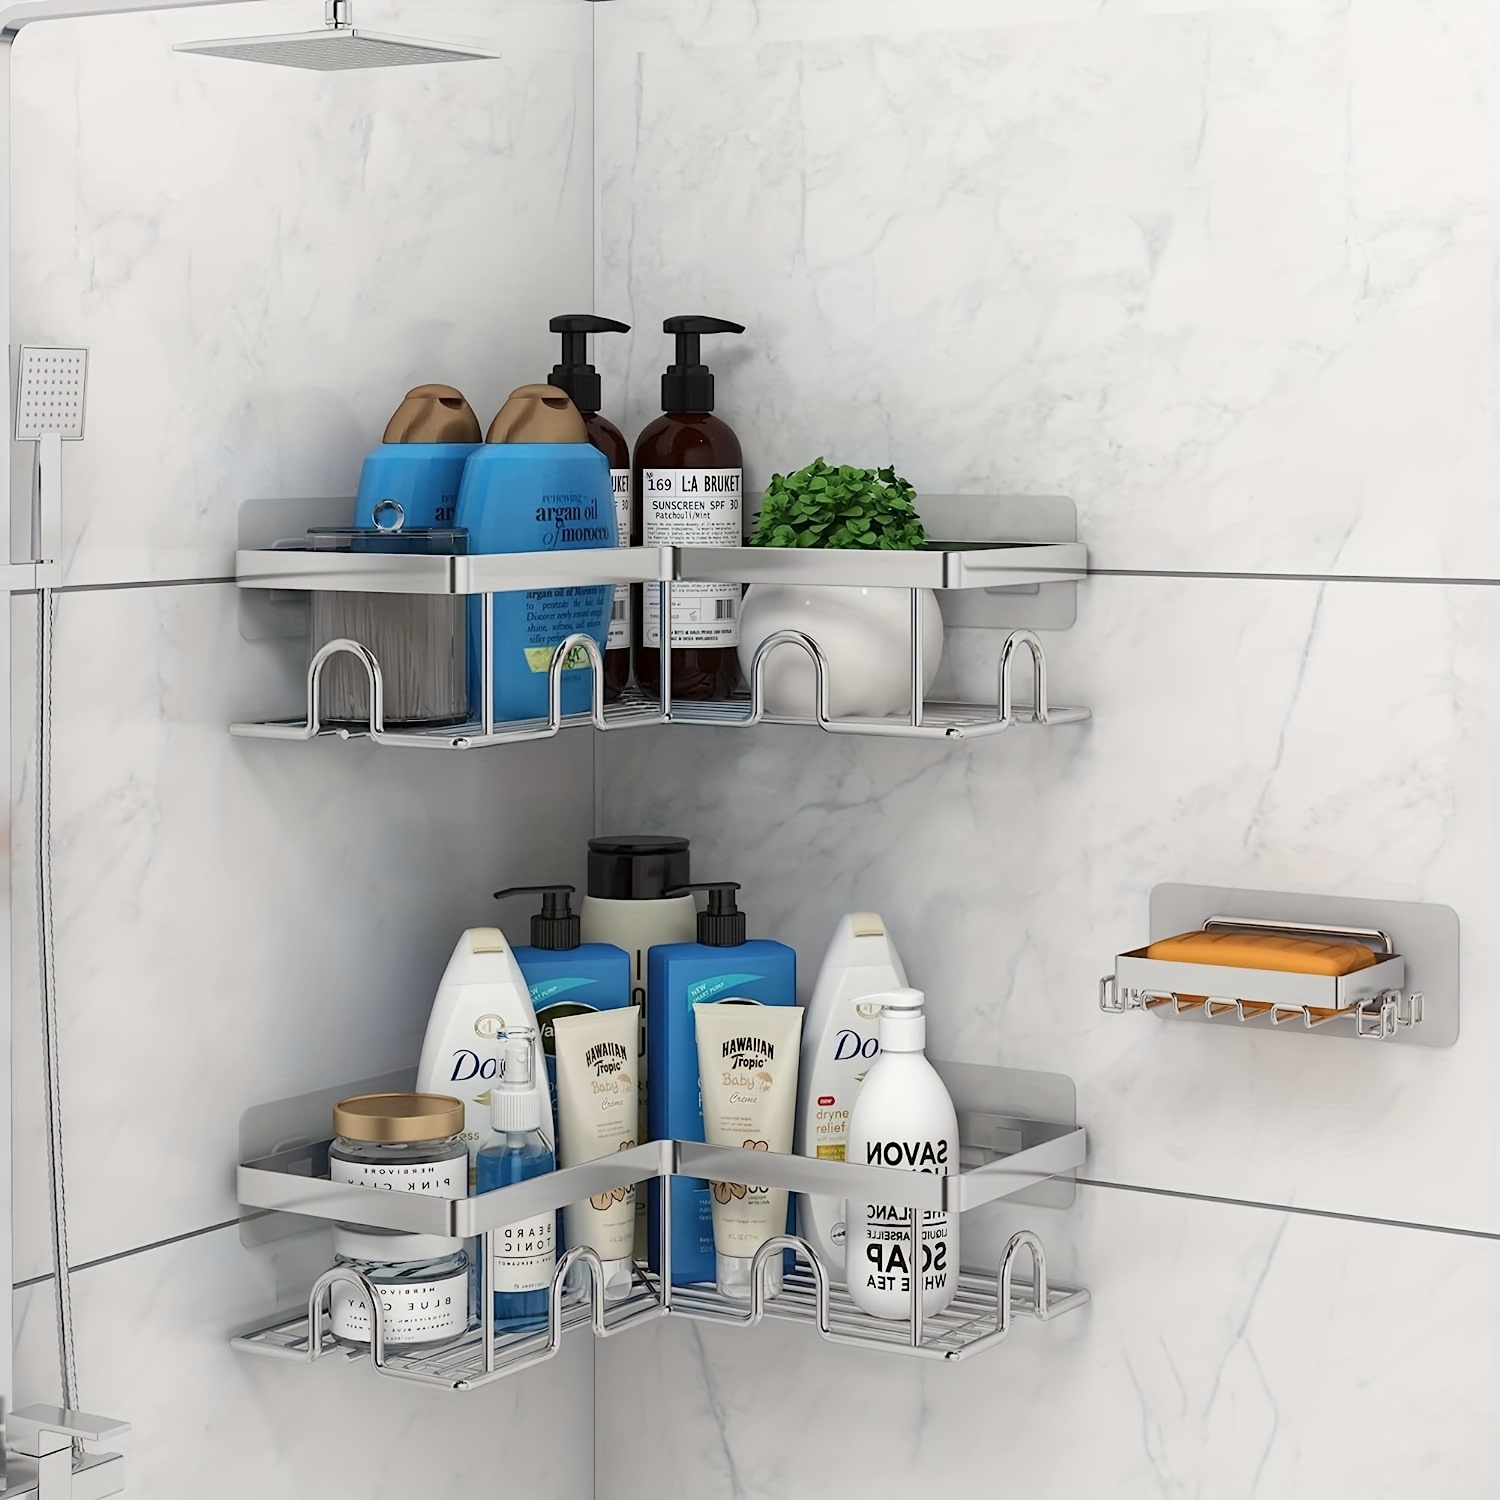  LAIGOO Adhesive Shower Caddy Corner Shelf, Hanging Bathroom  Shelves Wall Mounted Shower Shelf, Non-Drilling Floating Shelf for Bathroom  Organizer/Kitchen/Shower Organizer (2 Pack, Black) : Home & Kitchen